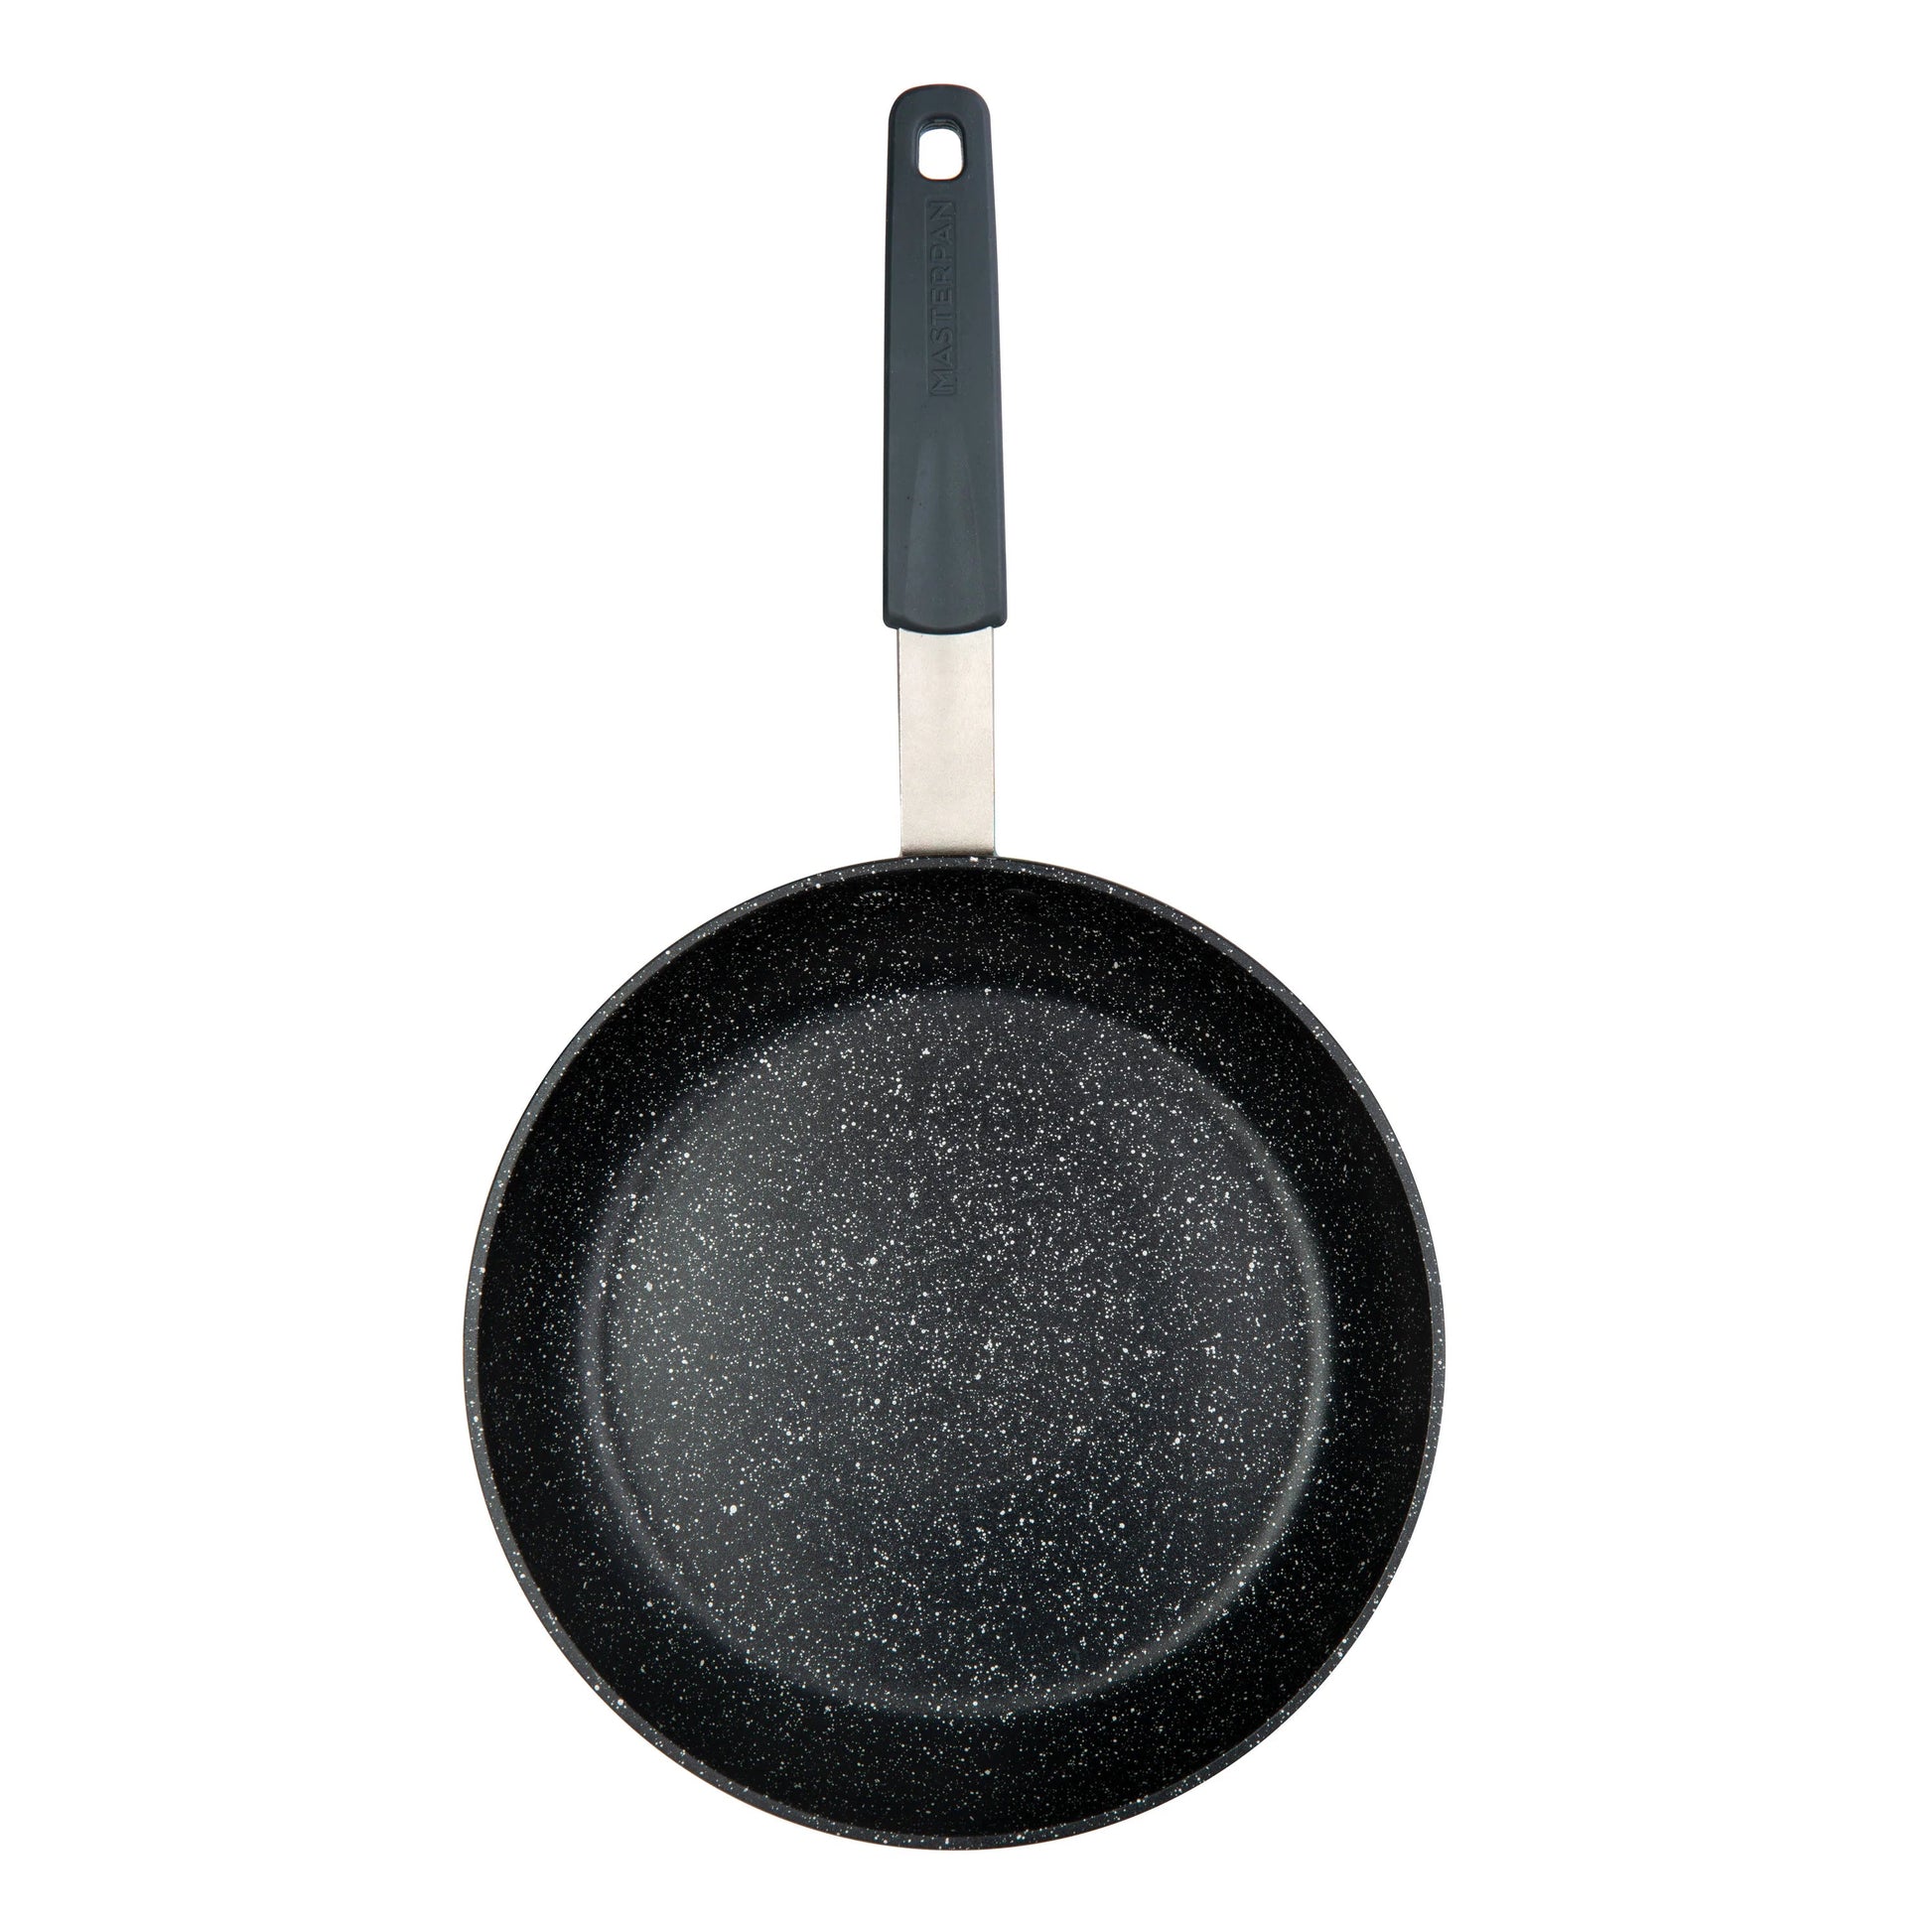 The New Four Piece Detachable Frying Pan Handle Aluminum